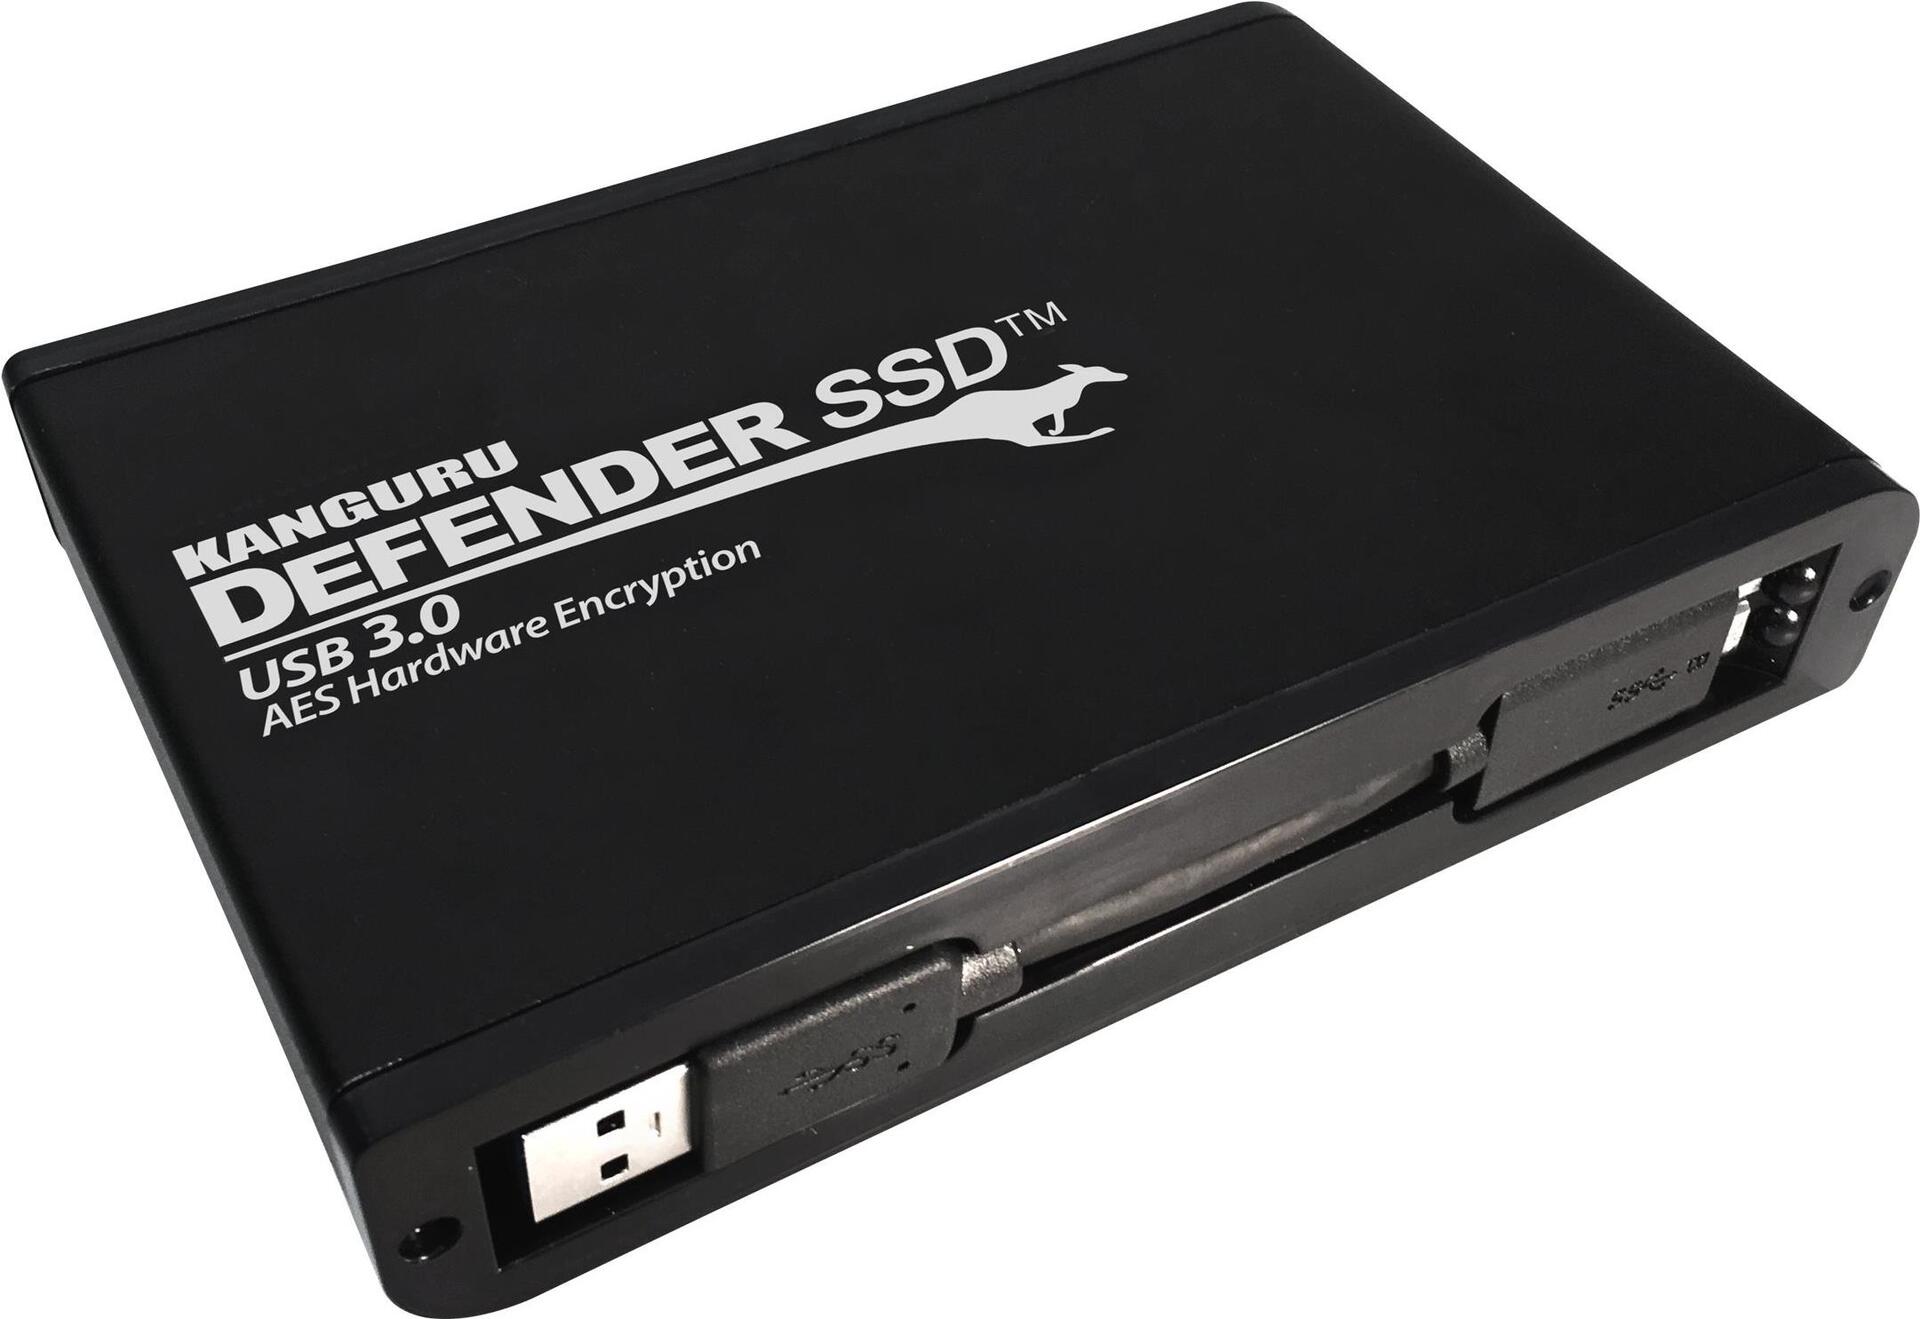 Kanguru Defender SSD 35 (KDH3B-35-2TSSD)